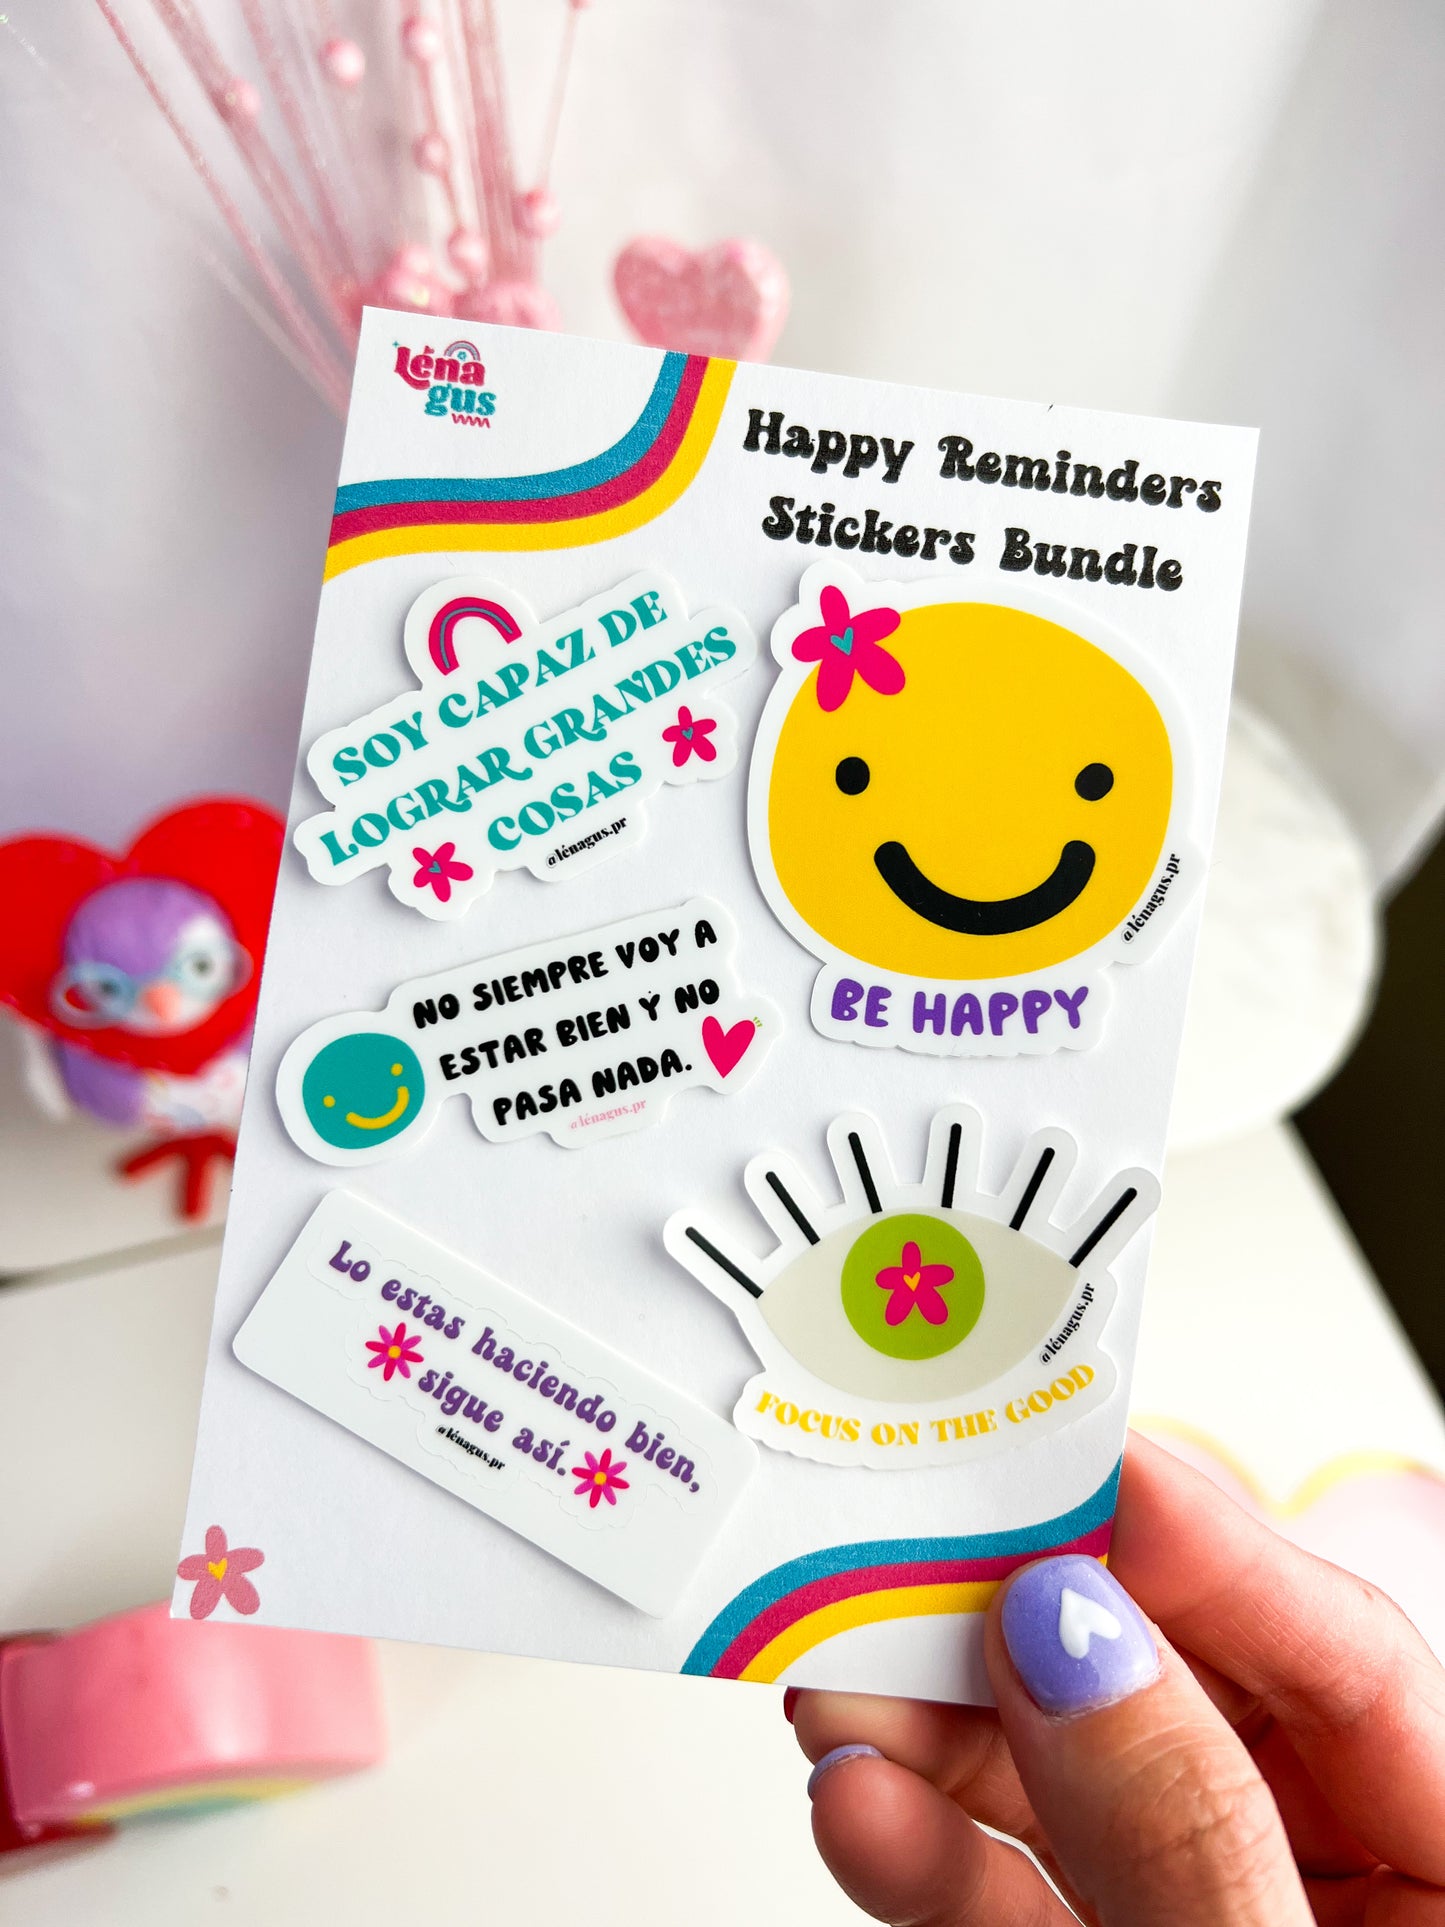 Happy Reminders Stickers Bundle